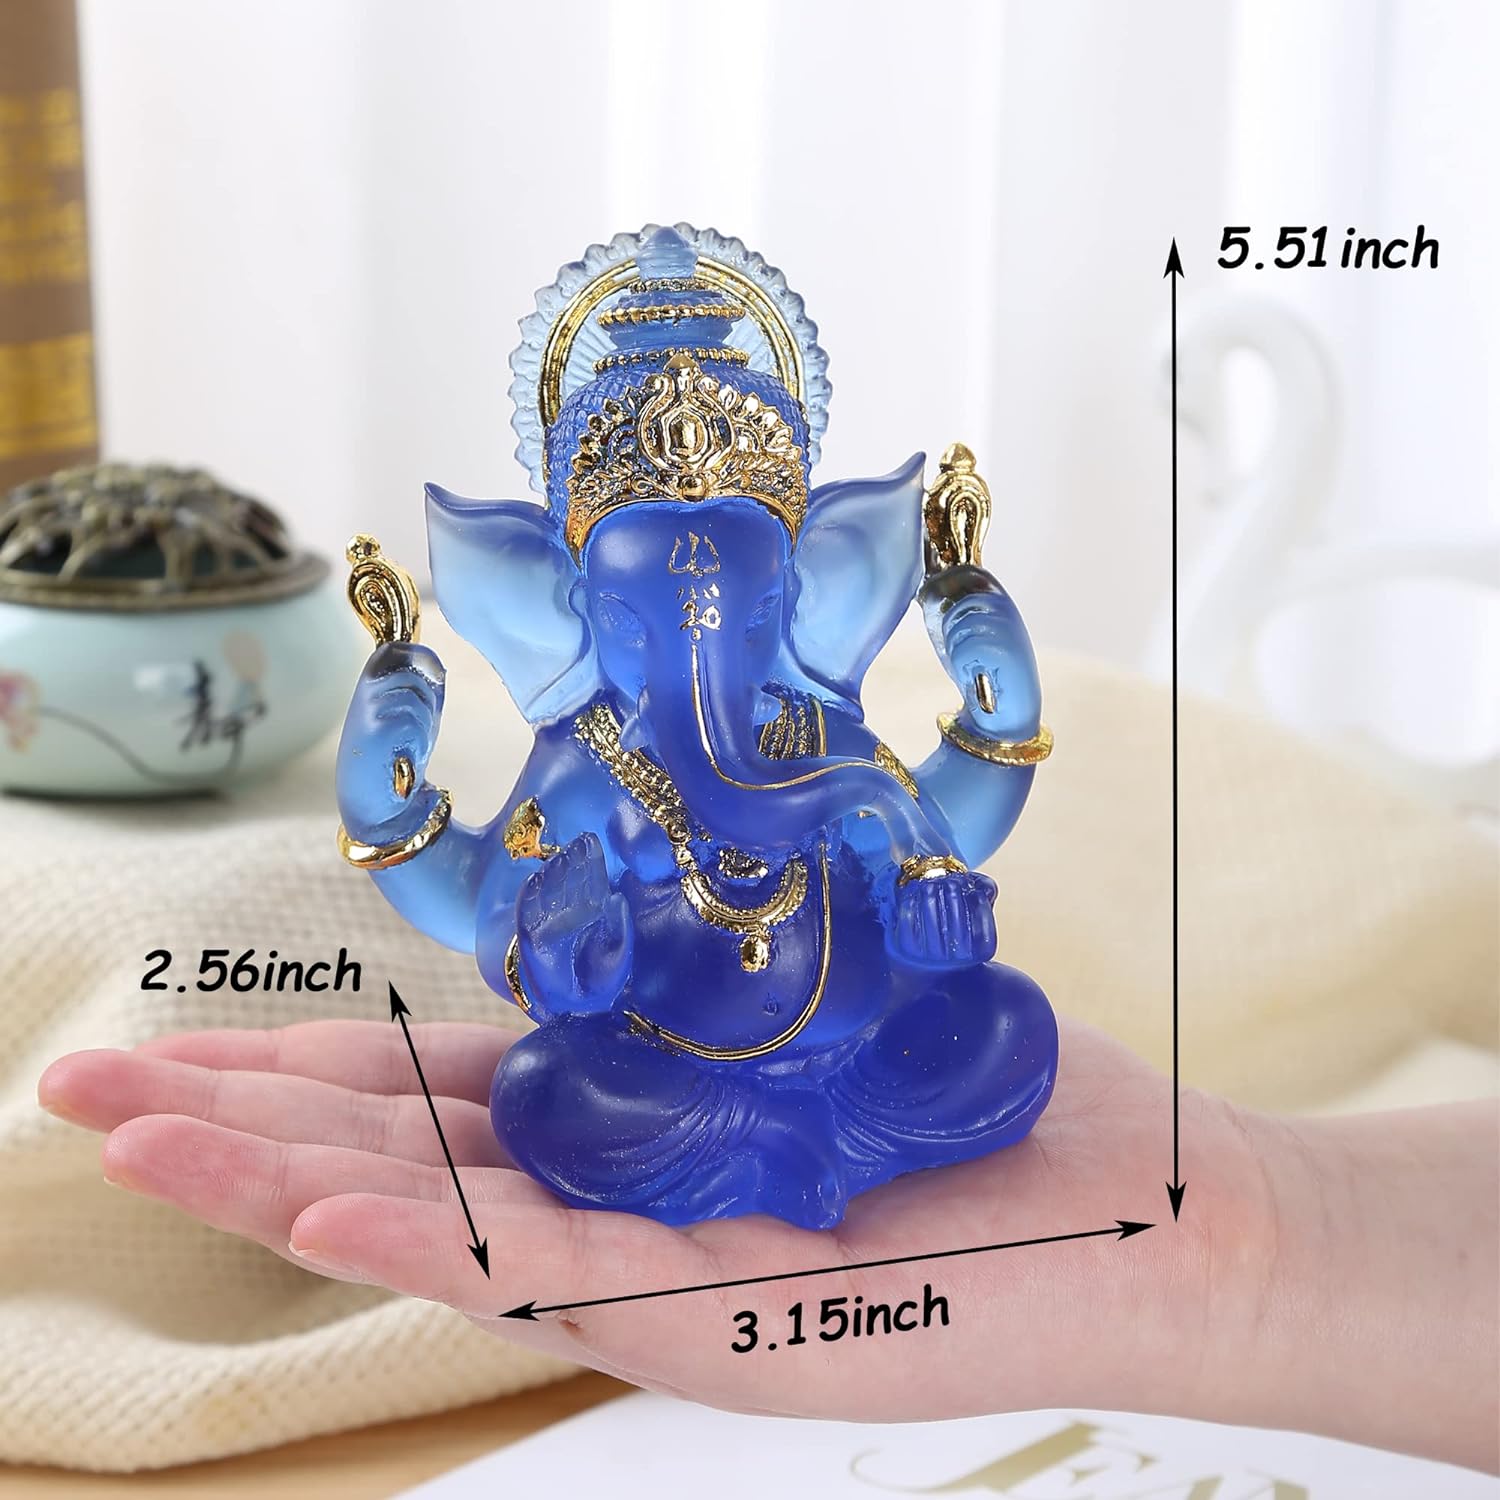 HW 5.6H Blessing A Blue Resin Statue of Lord Ganesha Ganpati Elephant Hindu God, Elephant God Statue, Lmitation Glass Sculpture Buddha Figurine Decoration